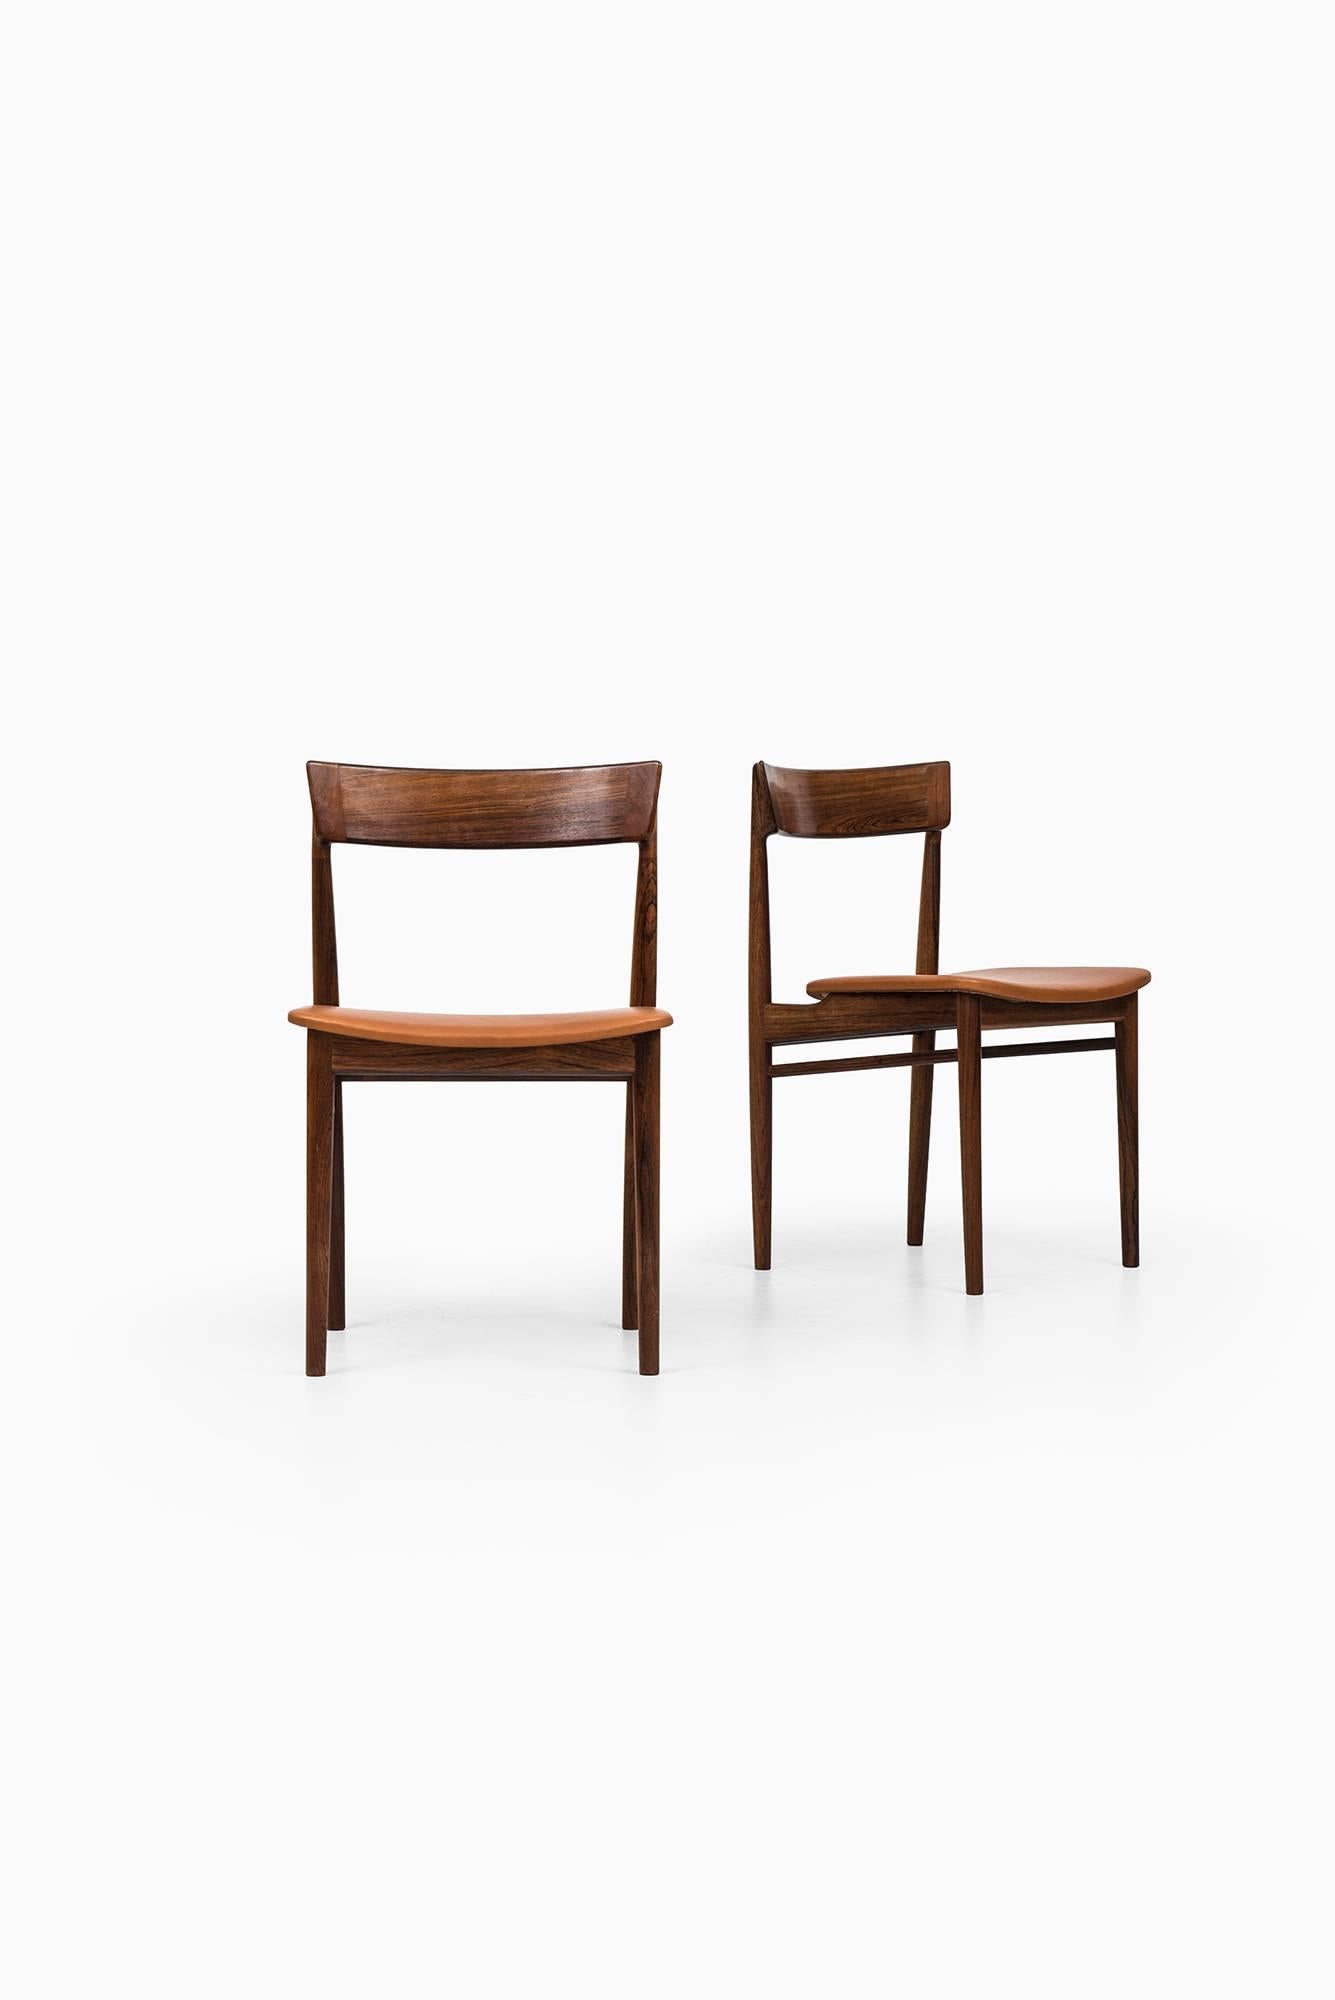 Rare set of eight dining chairs model 39 designed by Henry Rosengren Hansen. Produced by Brande Møbelfabrik in Denmark.